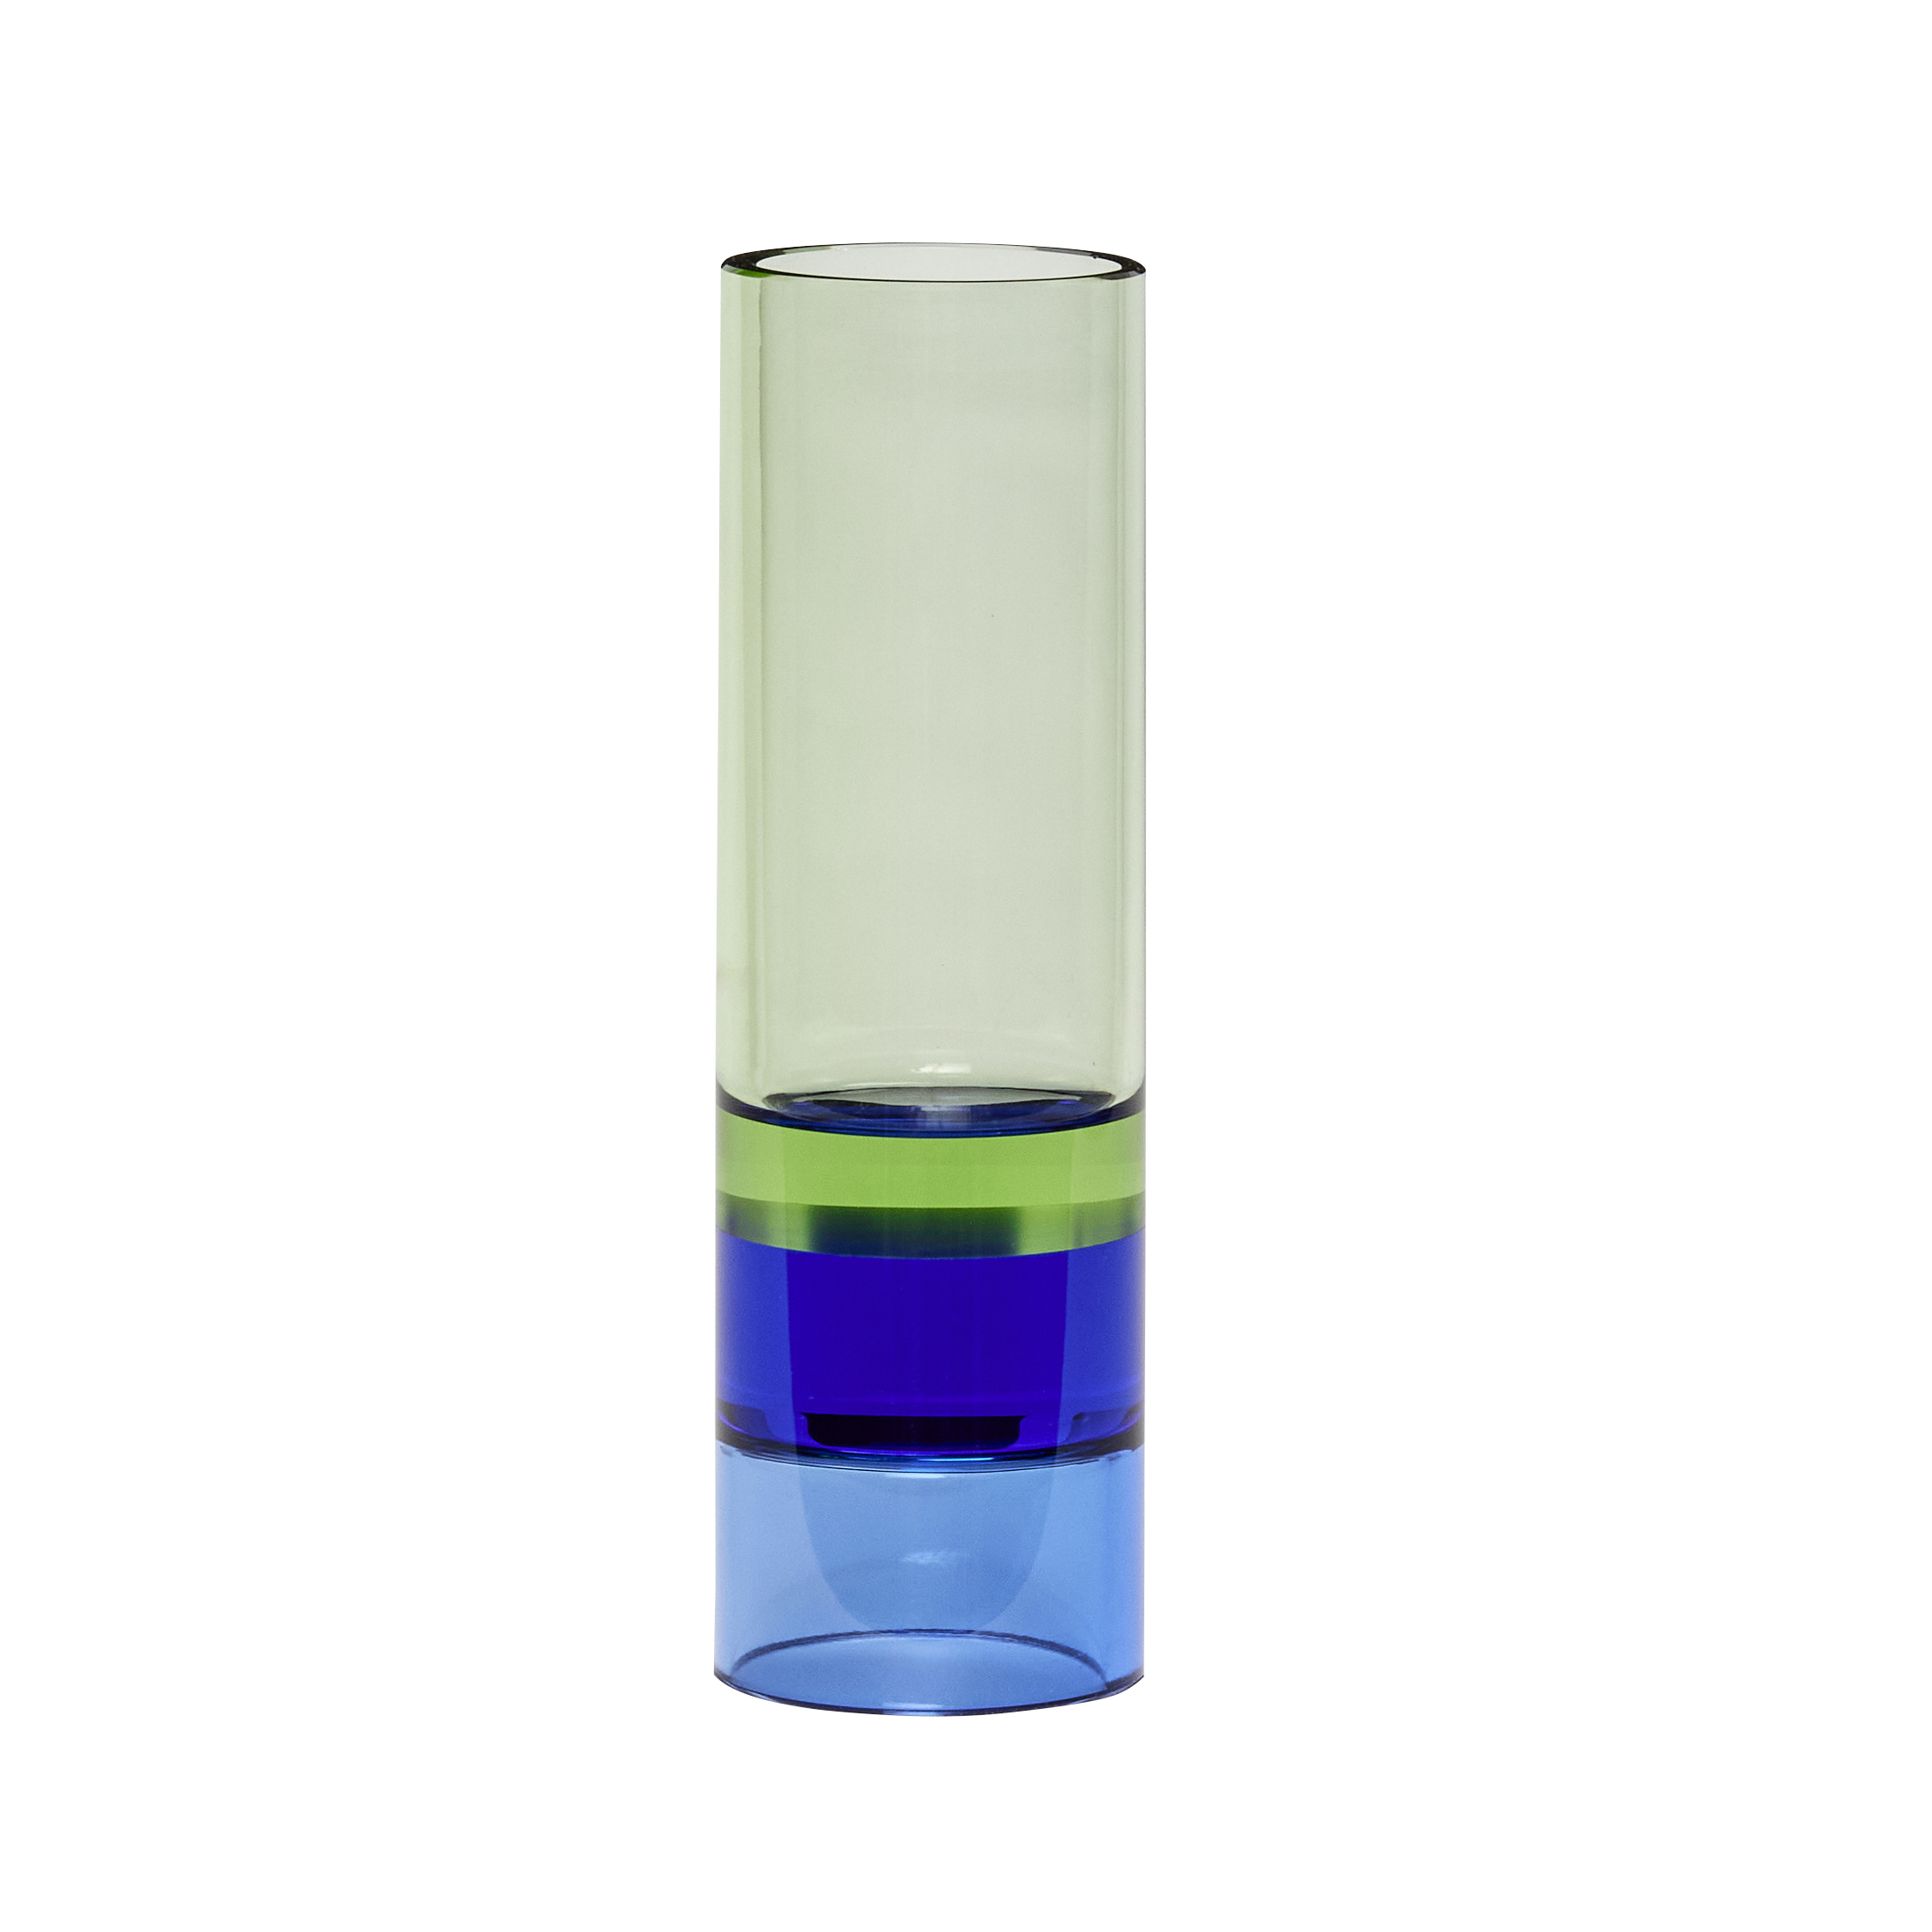 Hubsch Astro Crystal Vase - Green / Blue